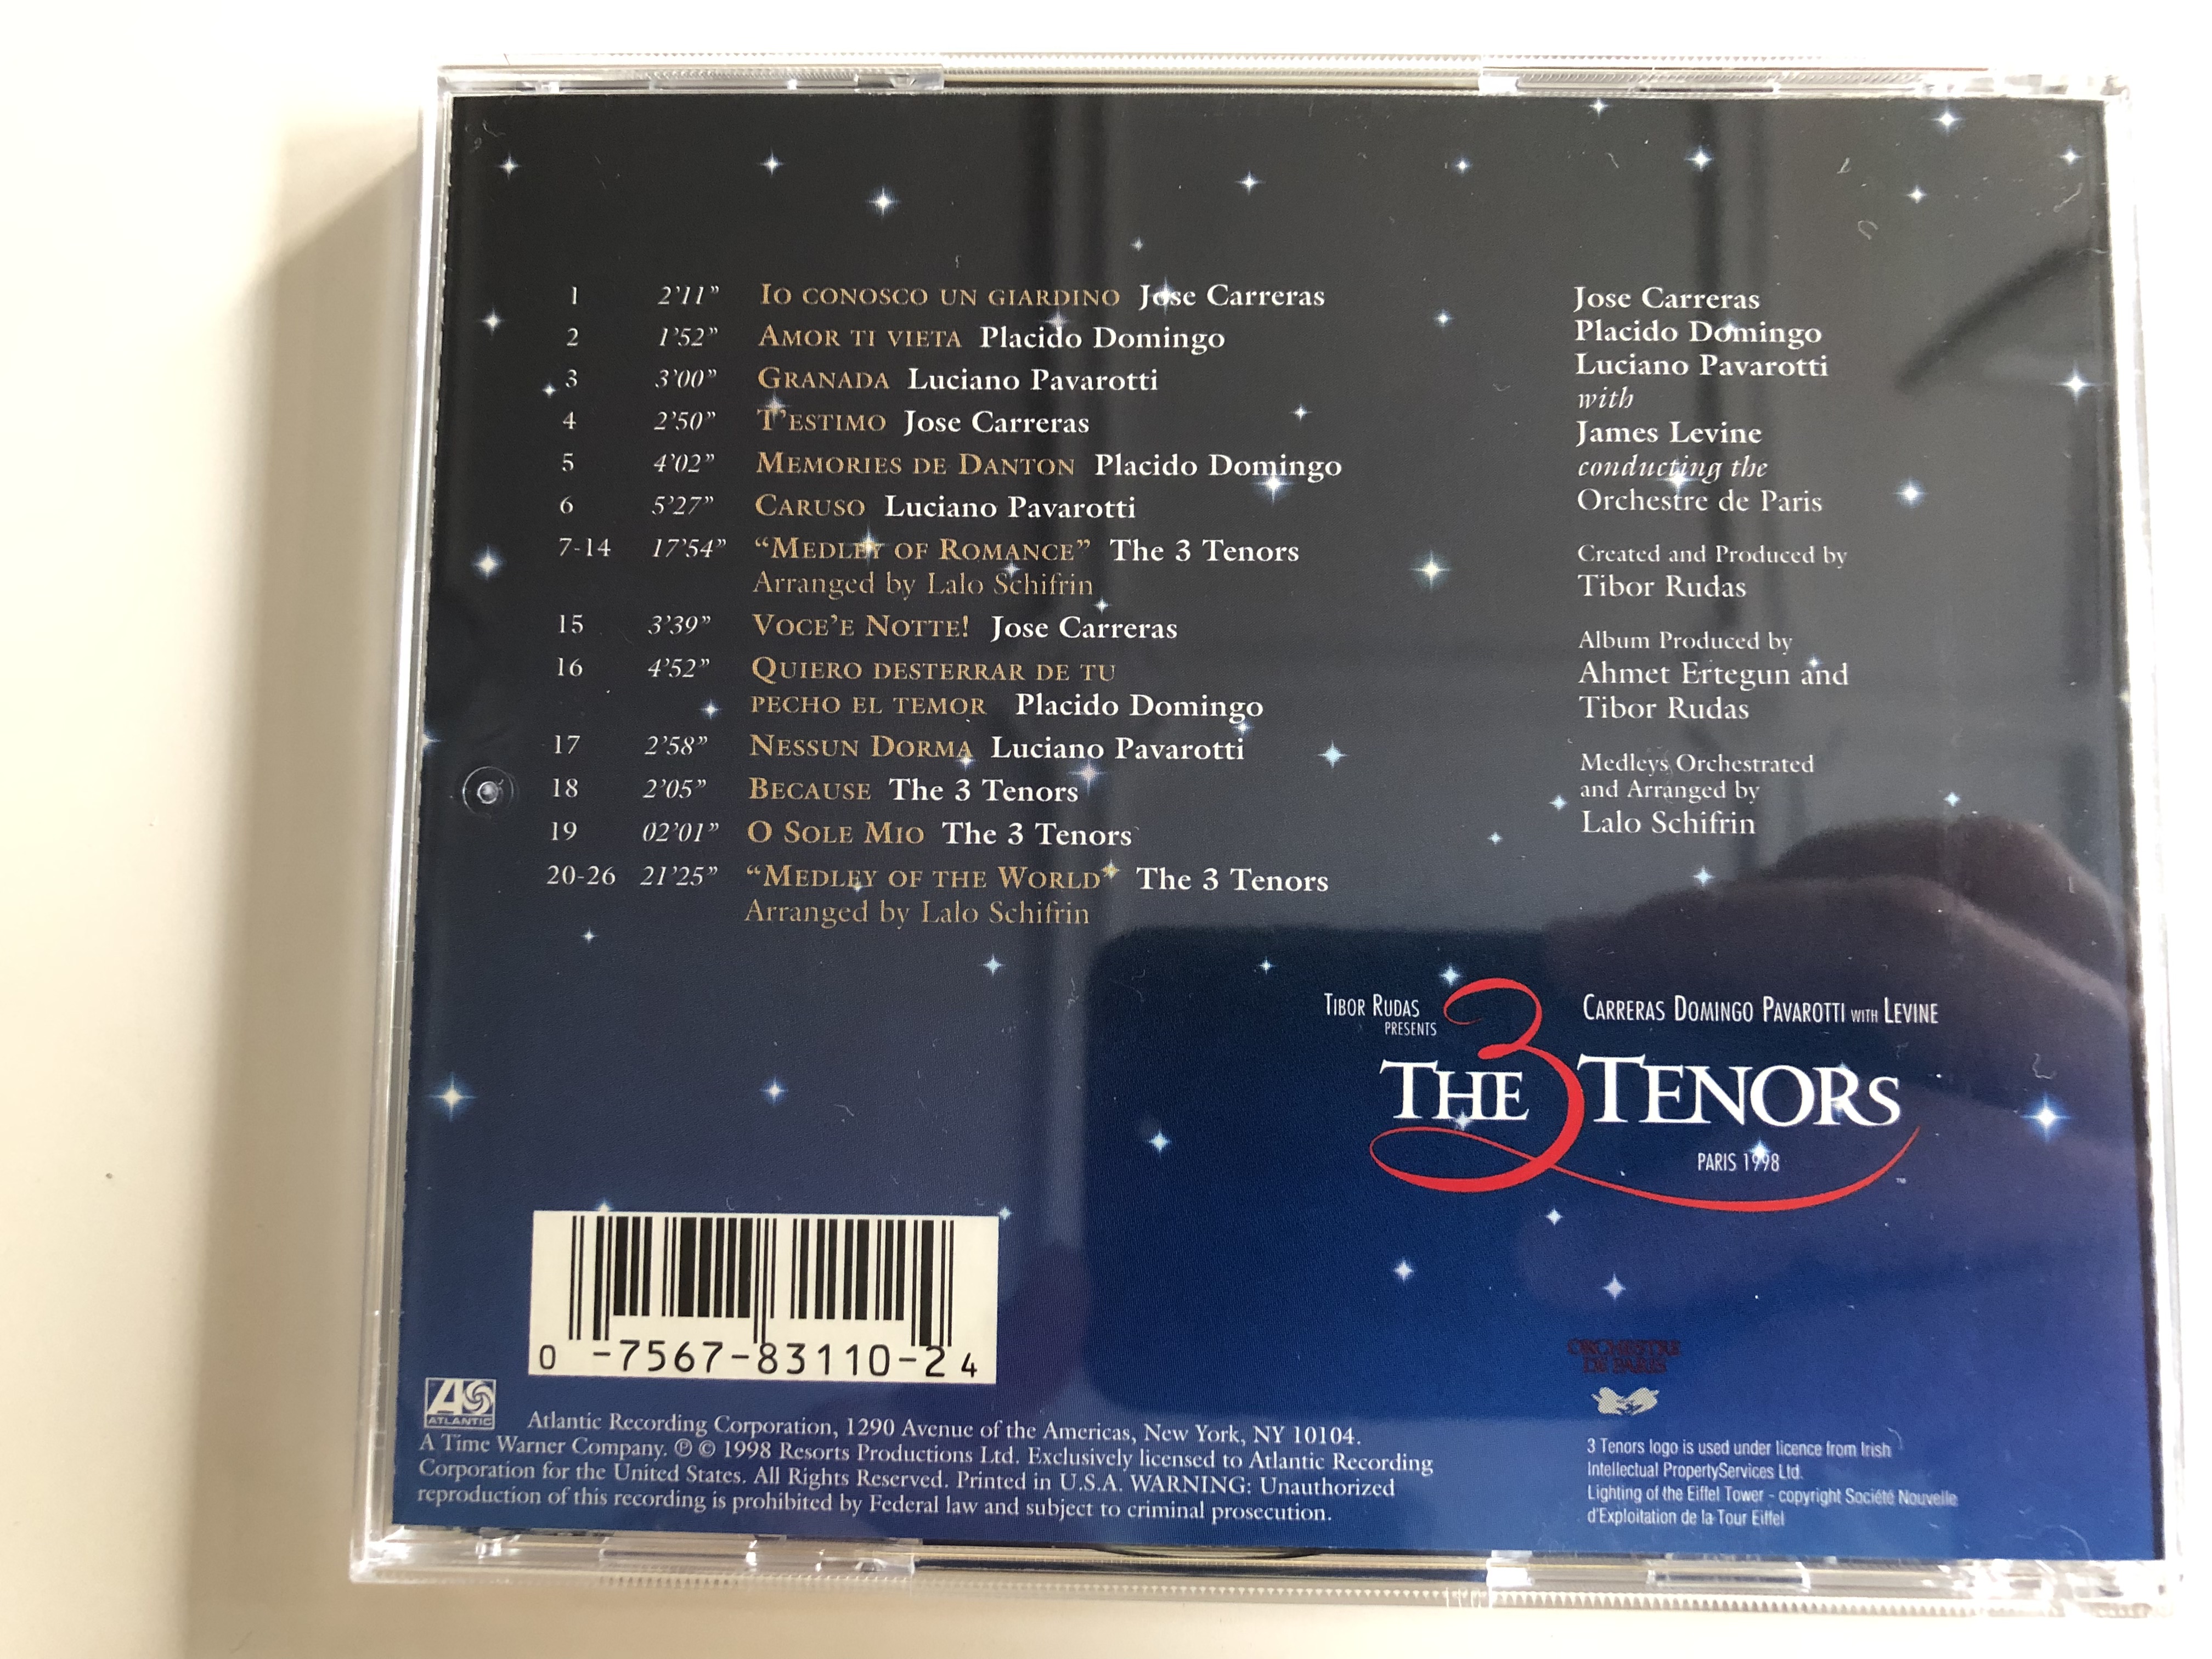 -tibor-rudas-presents-the-3-tenors-paris-1998-carreras-domingo-pavarotti-with-levine-the-concert-of-the-century-recorded-live-audio-cd-1998-8-.jpg